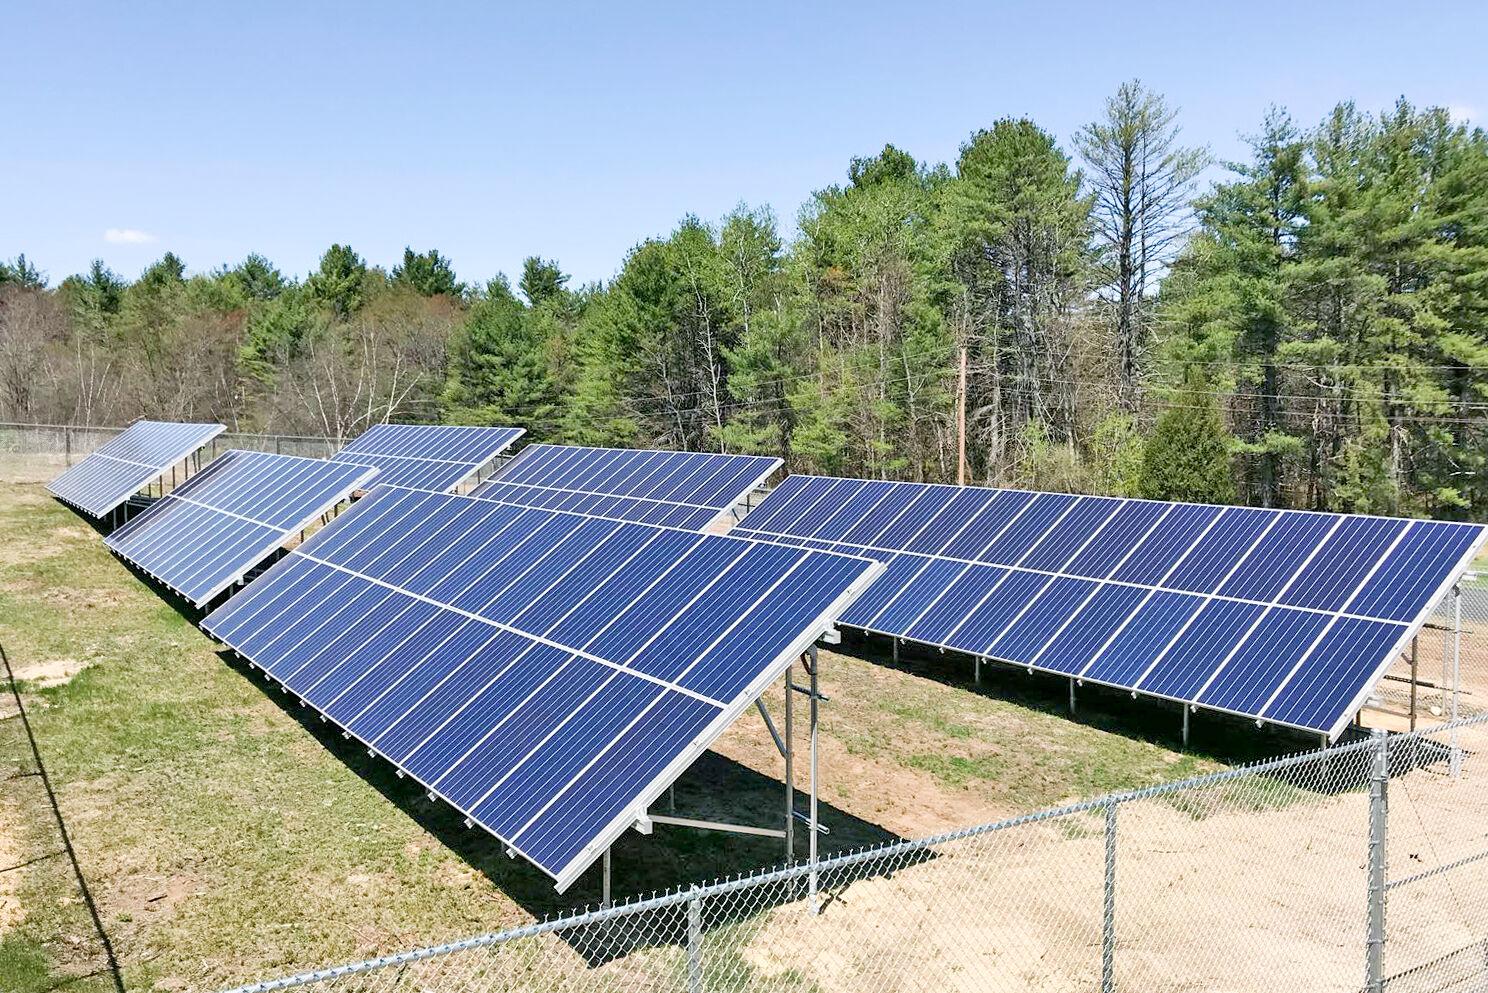 NH Boys’ Facility Adopts Solar Power